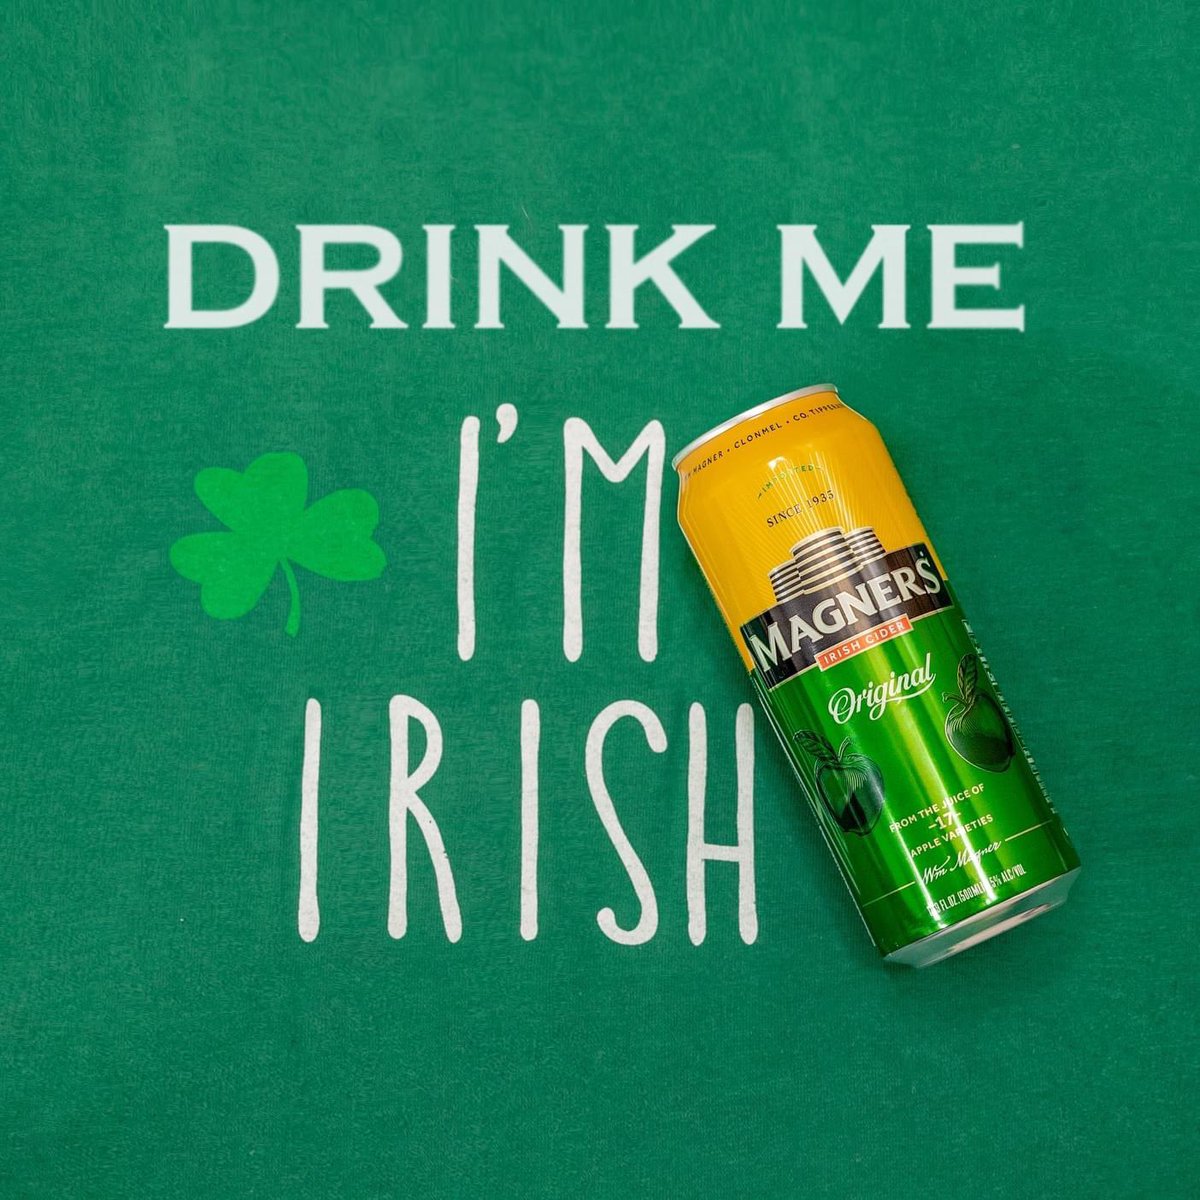 🍀Happy St. Patrick’s Day🍀 

#stpatricksday2023 #stpatricksday #jerseyshore #jersey #irishcider #cider #hardcider #hardciders #ciderlover #hardciderlover #magnerscider #magnersoriginal #ireland